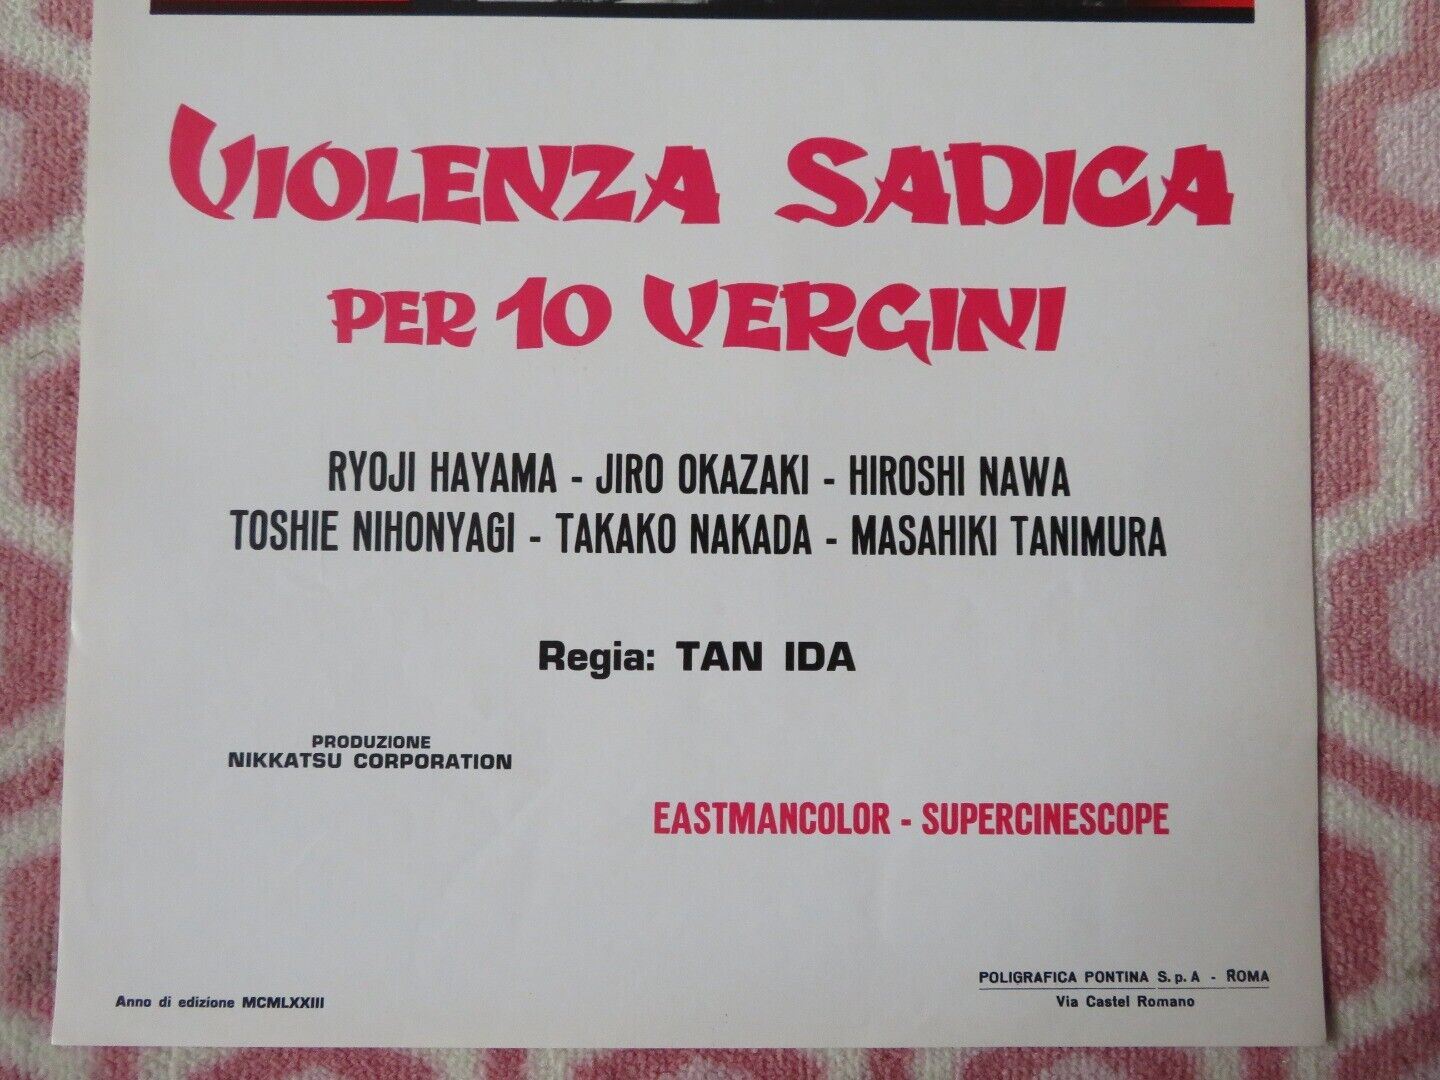 VIOLENZA SADICA PER 10 VEGINI ITALIAN LOCANDINA (27.5"x13") POSTER R HAYAMA '68